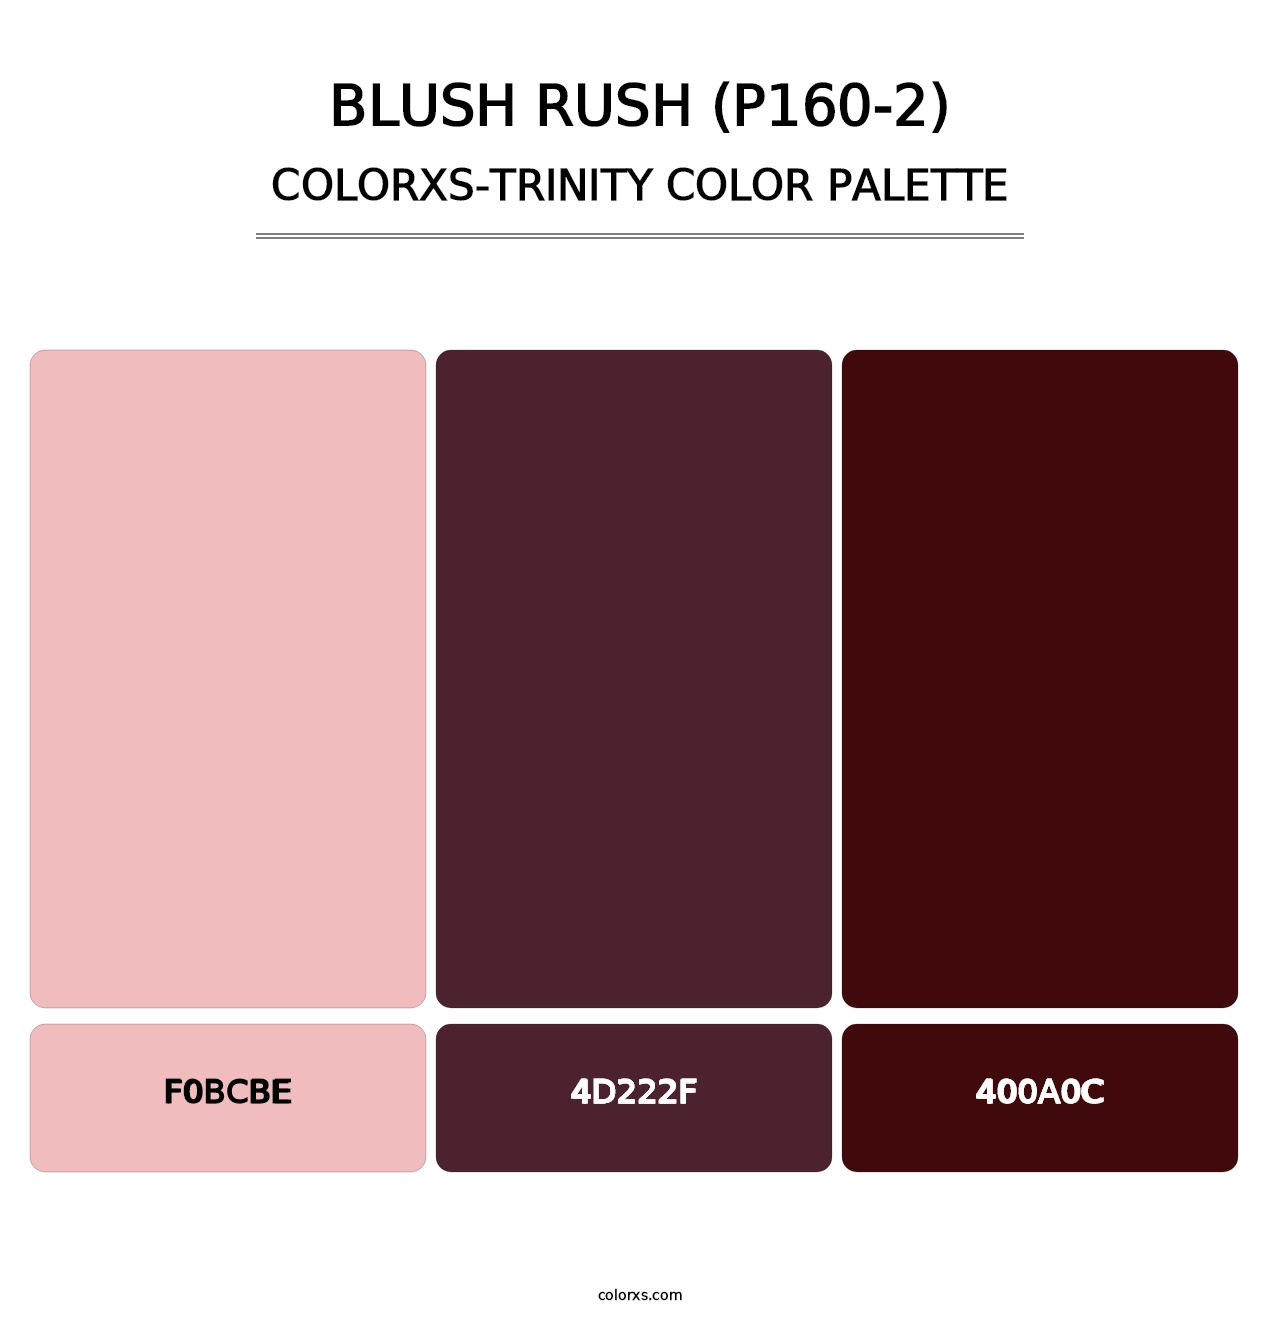 Blush Rush (P160-2) - Colorxs Trinity Palette